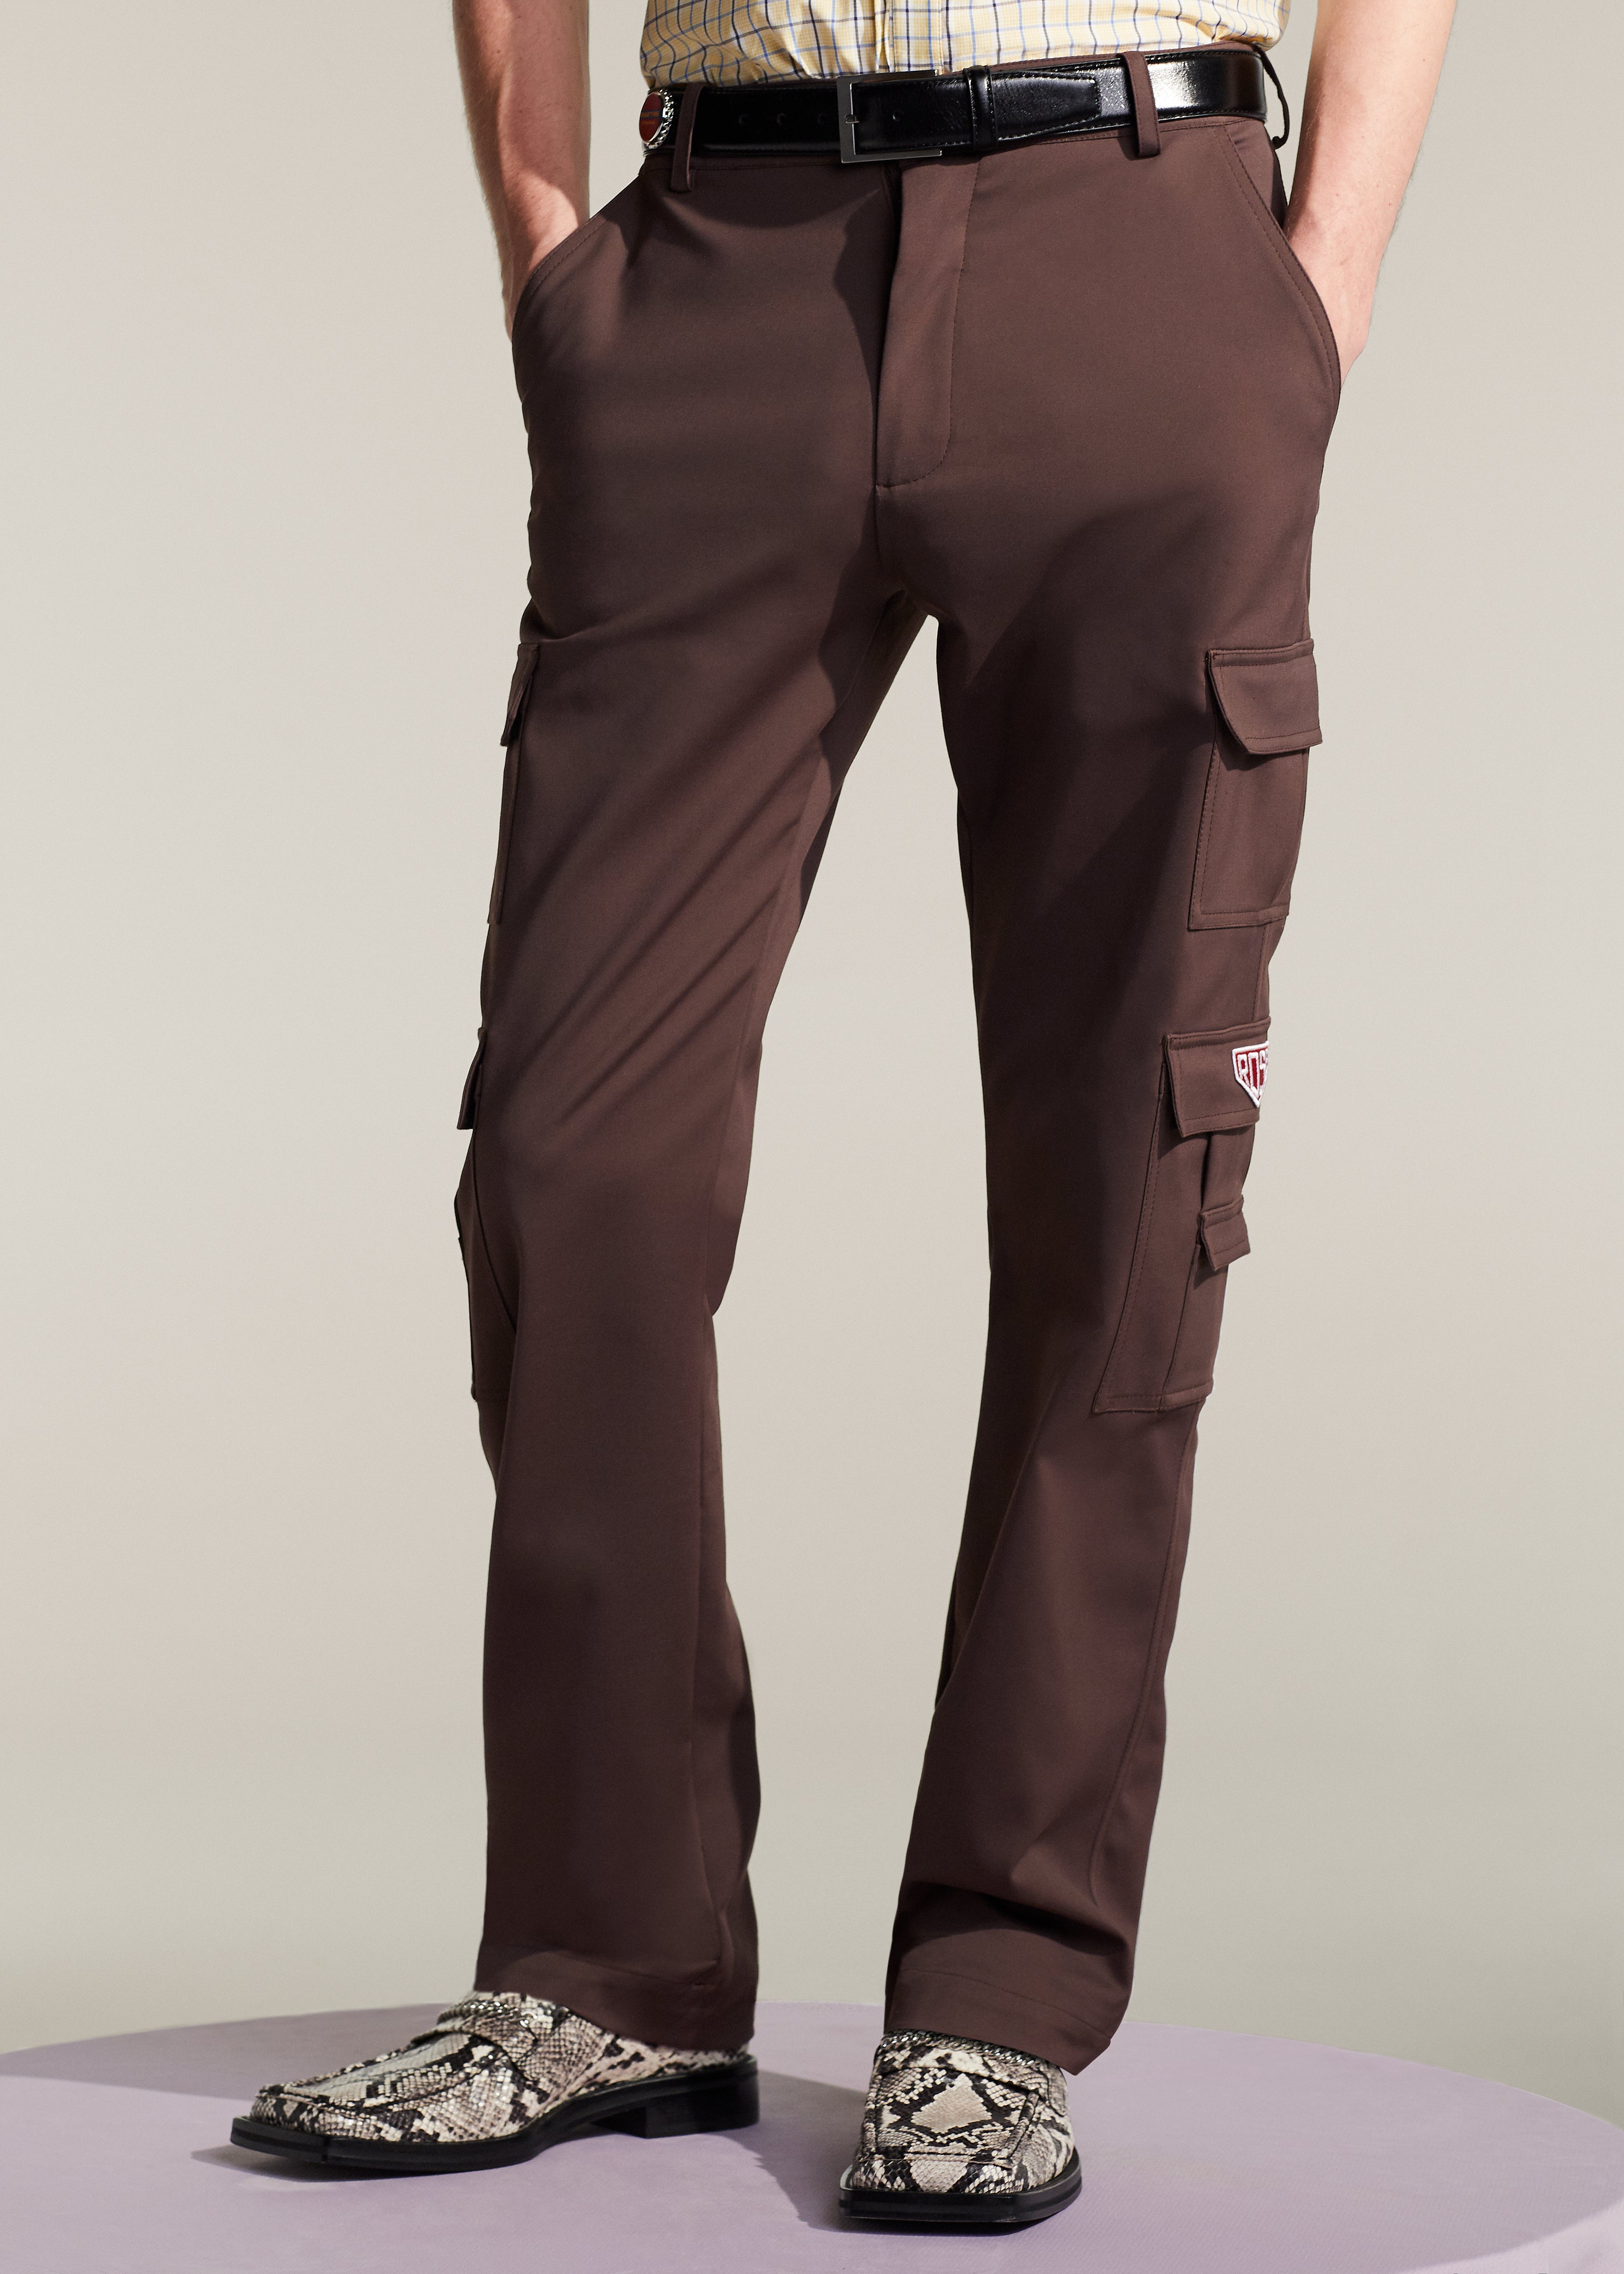 kaval 20SS new simple jacket trousers | www.carmenundmelanie.at